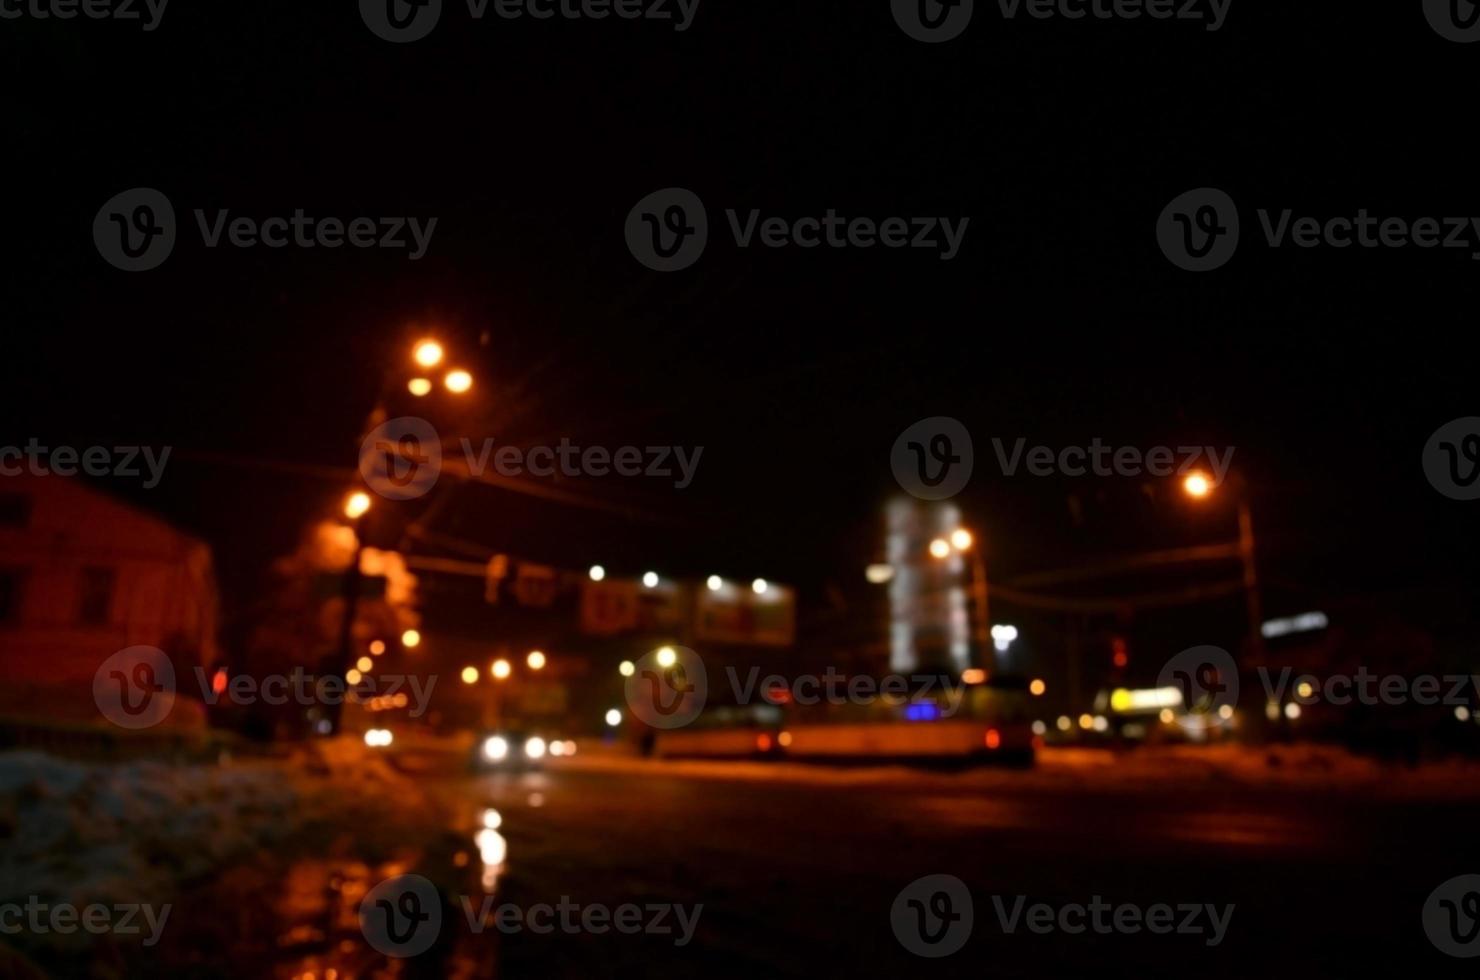 Blurred landscape of night city photo